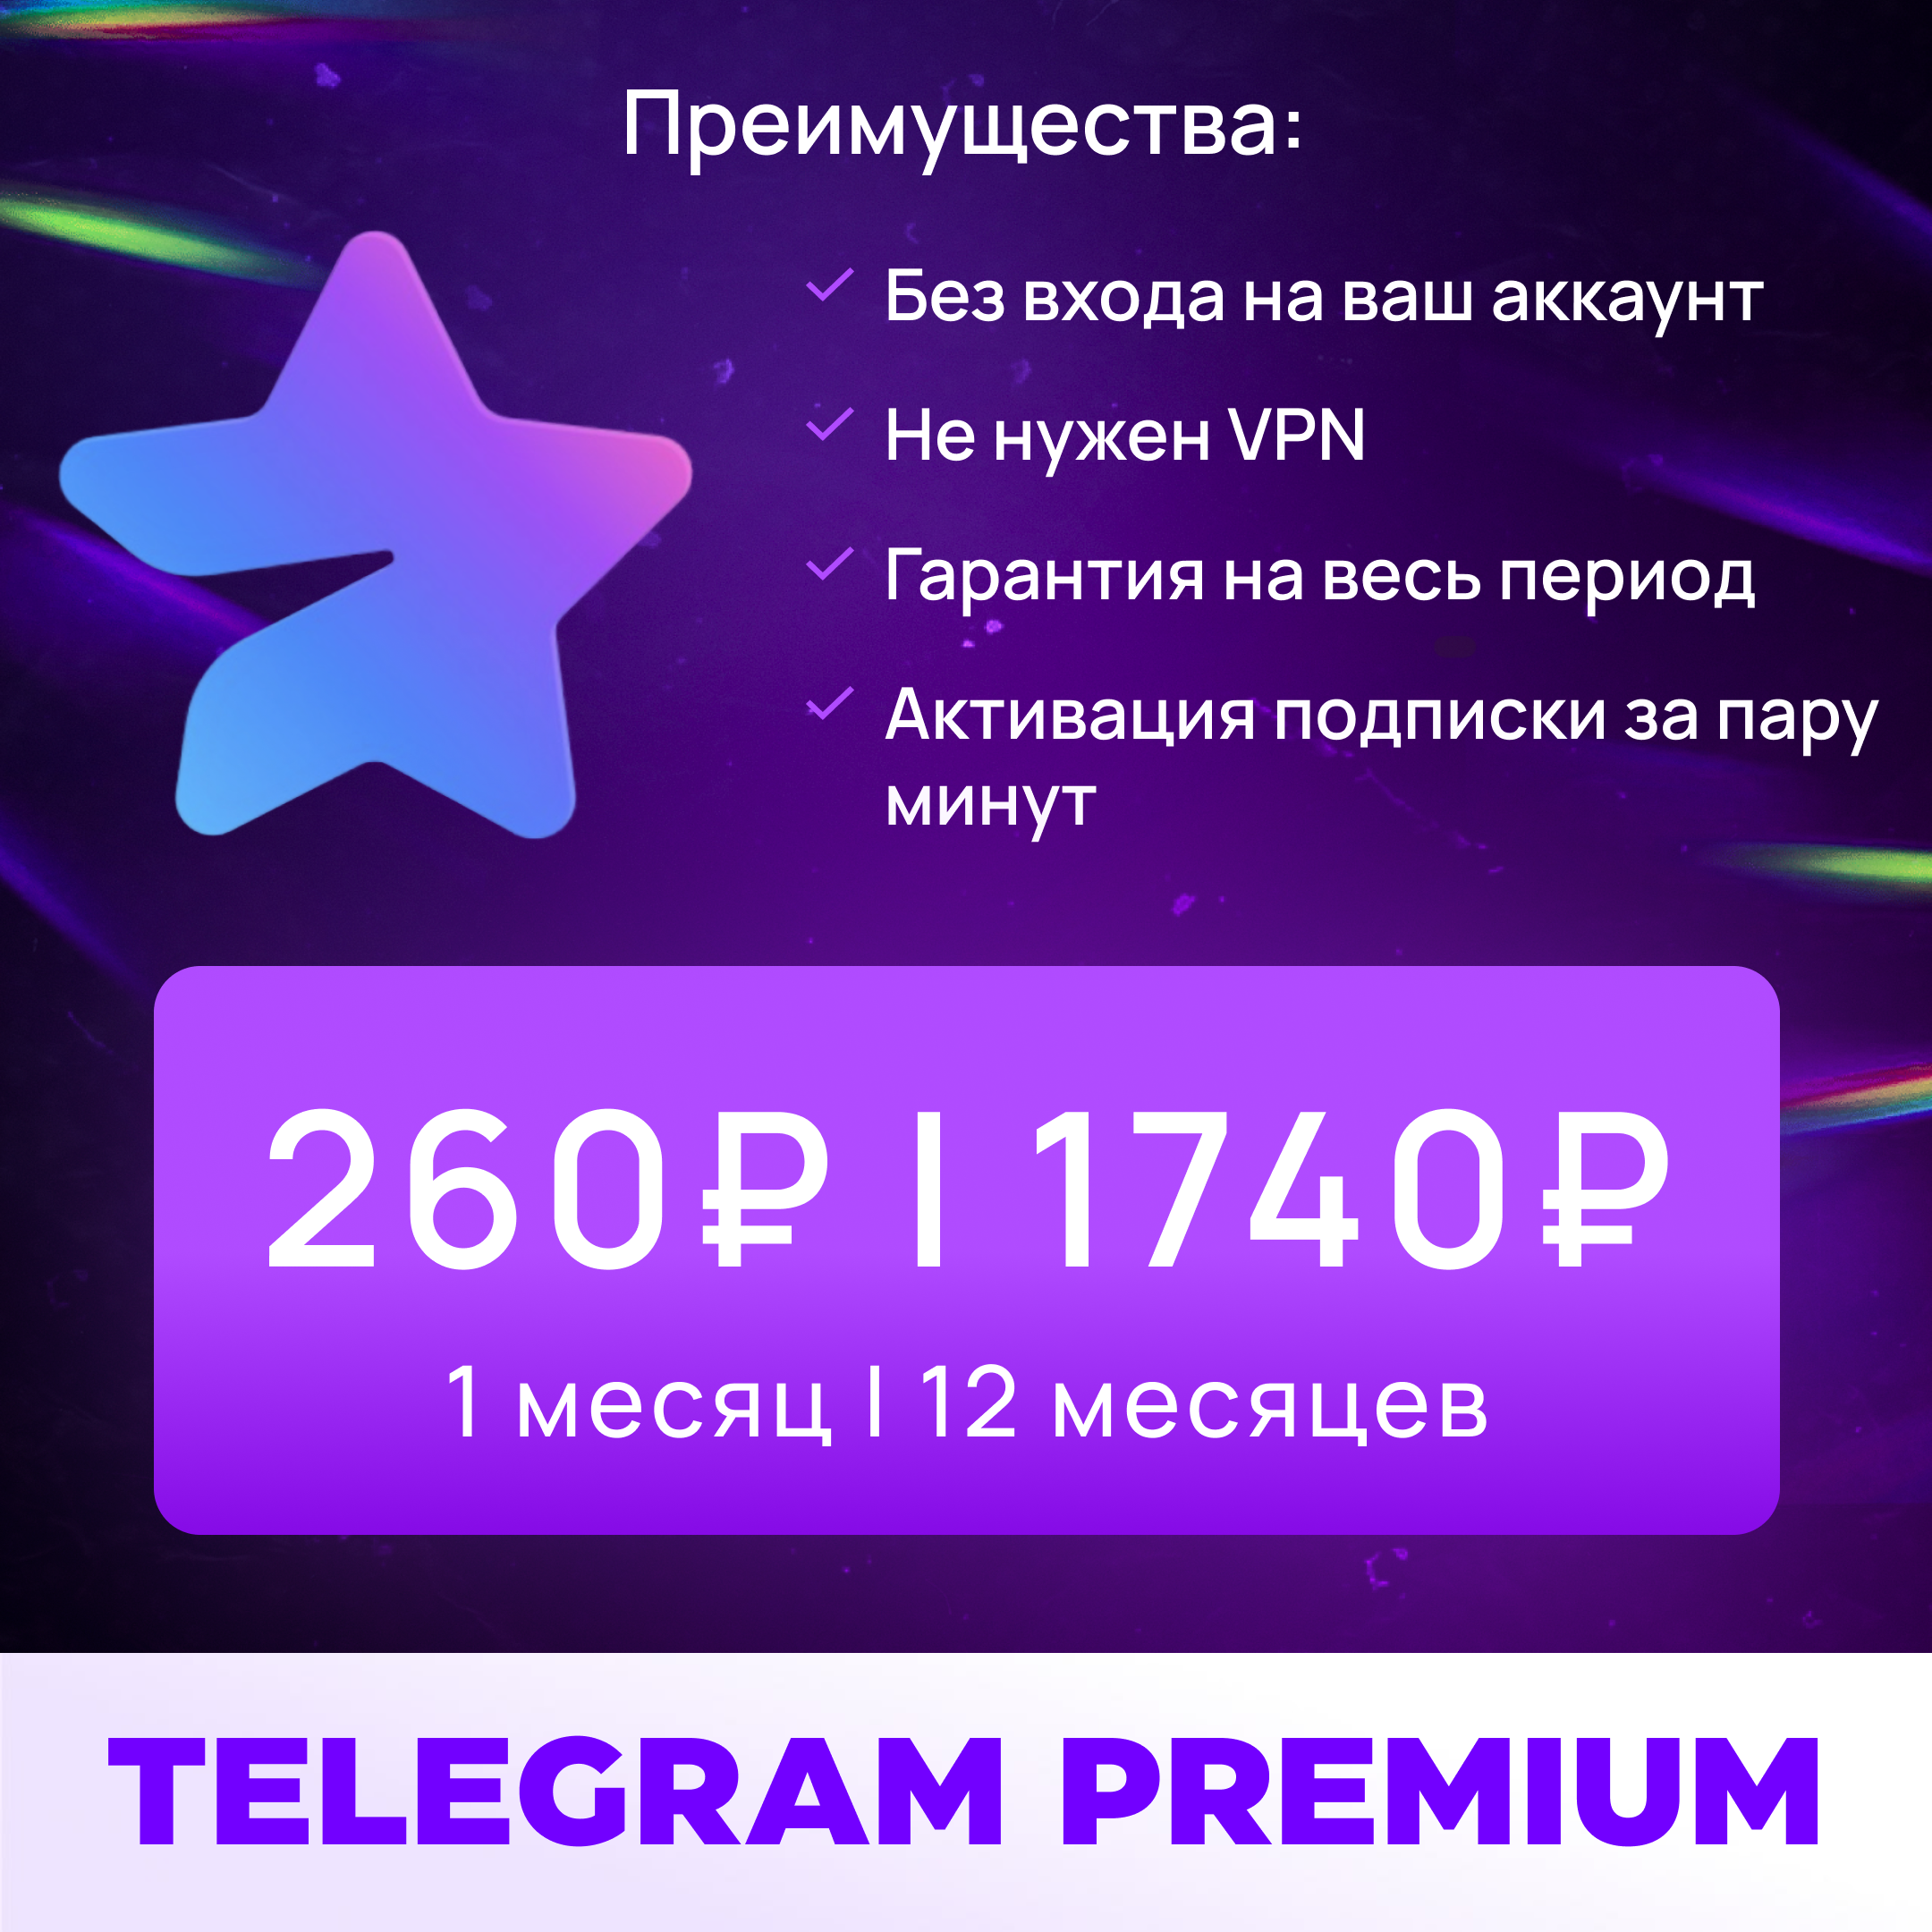 Премиум телеграмм бесплатно получить на андроид последняя версия фото 98